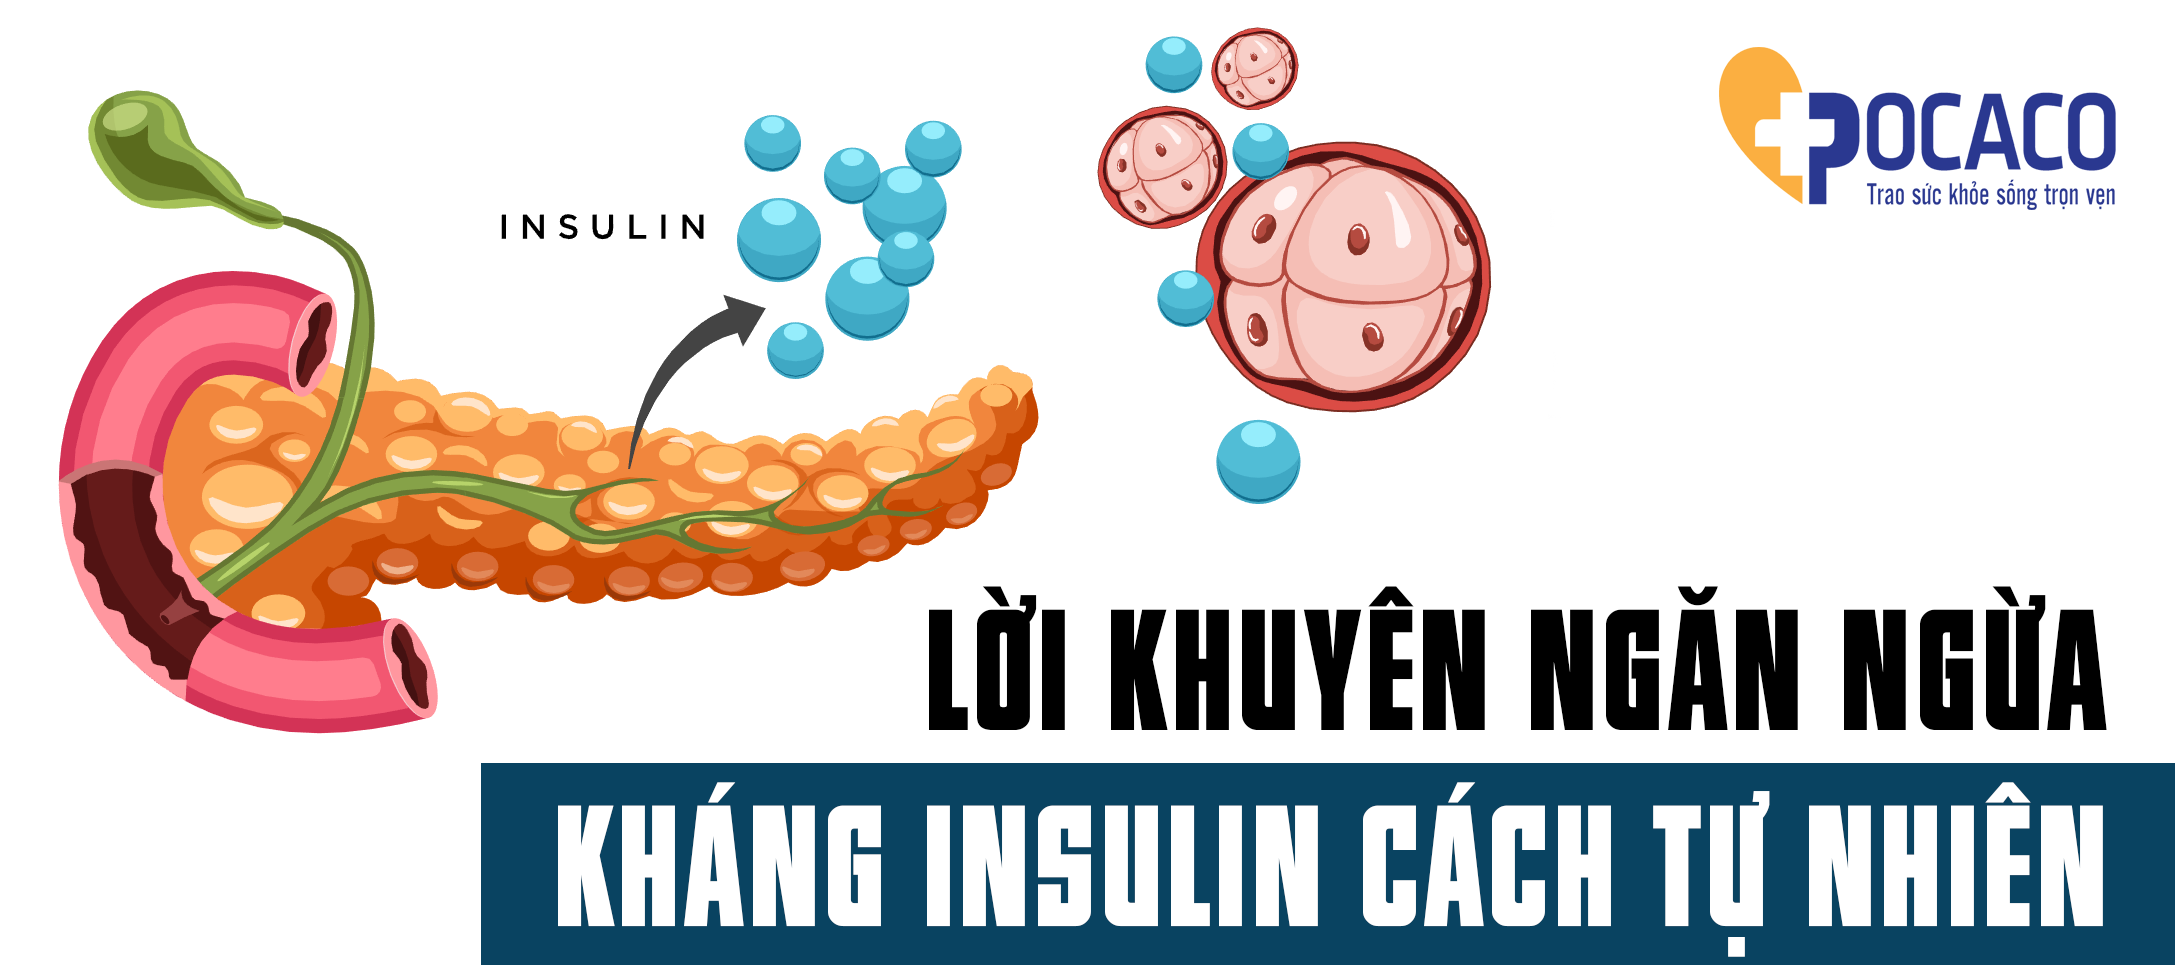 ngan-ngua-tinh-trang-khang-insulin-mot-cach-tu-nhien-1